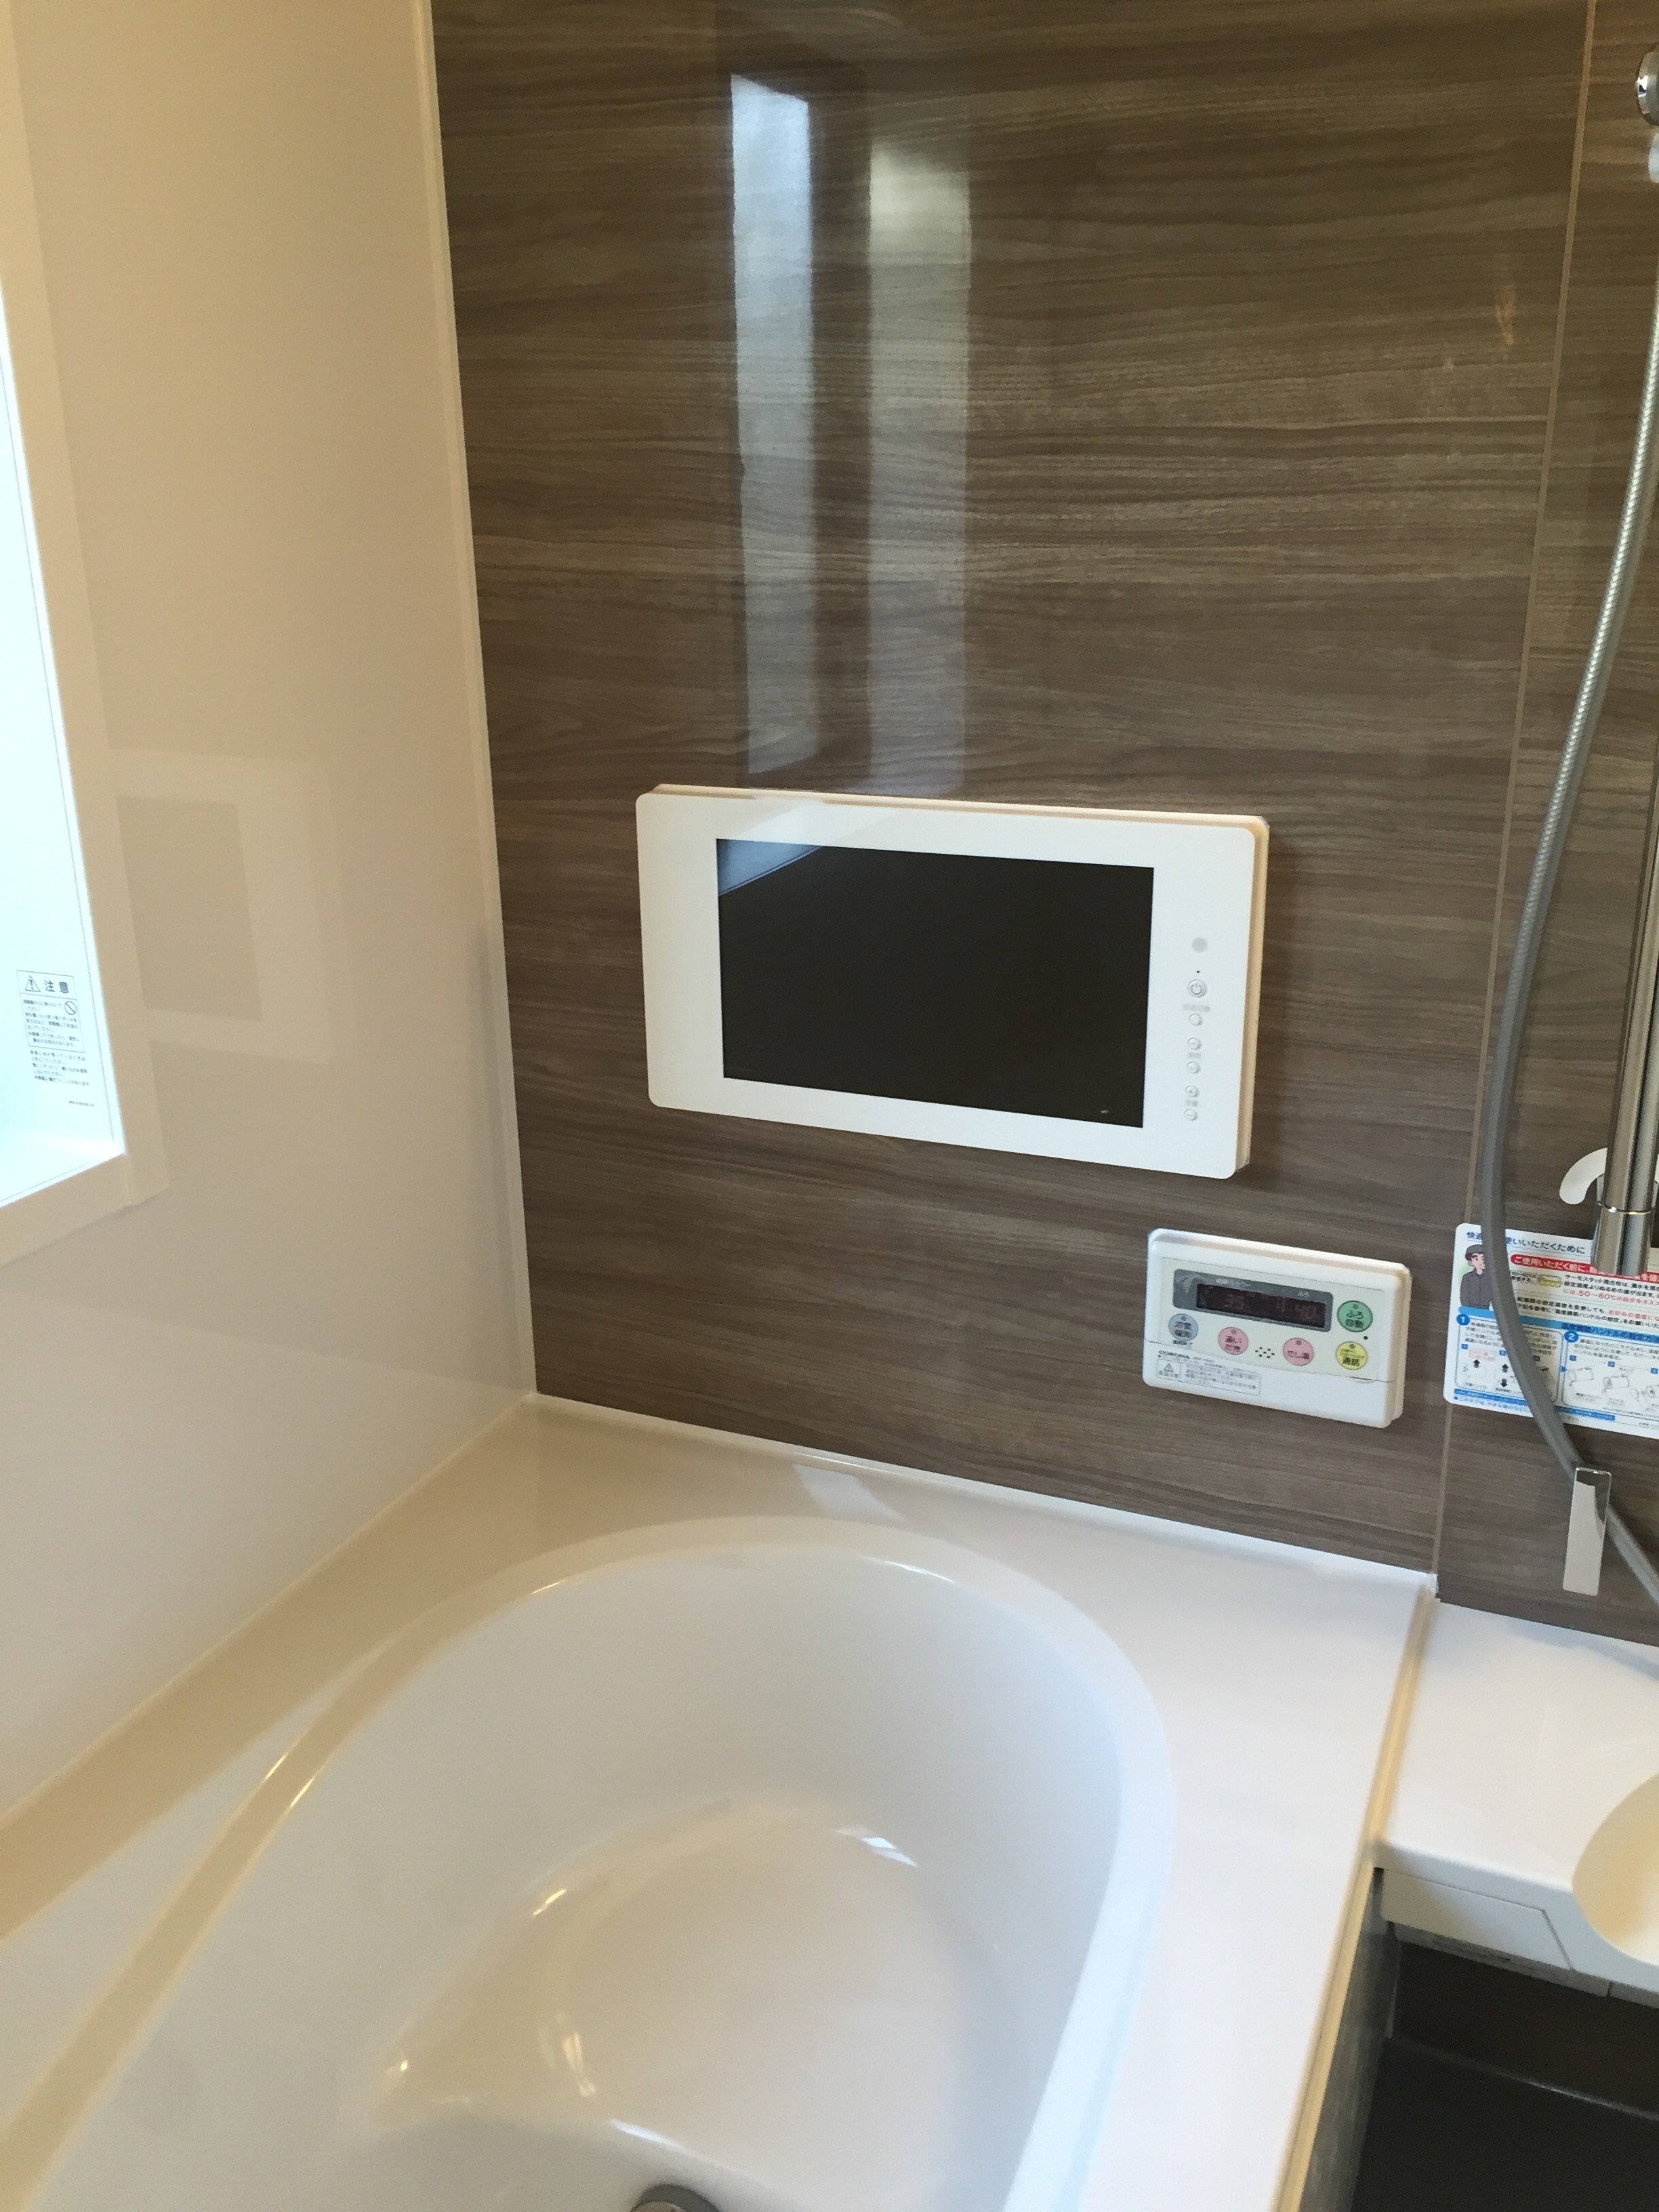 NEW ARRIVAL 工事費込みセット 浴室テレビ リンナイ DS-1600HV-W 16V型浴室テレビ 地デジ BS 110°CS 